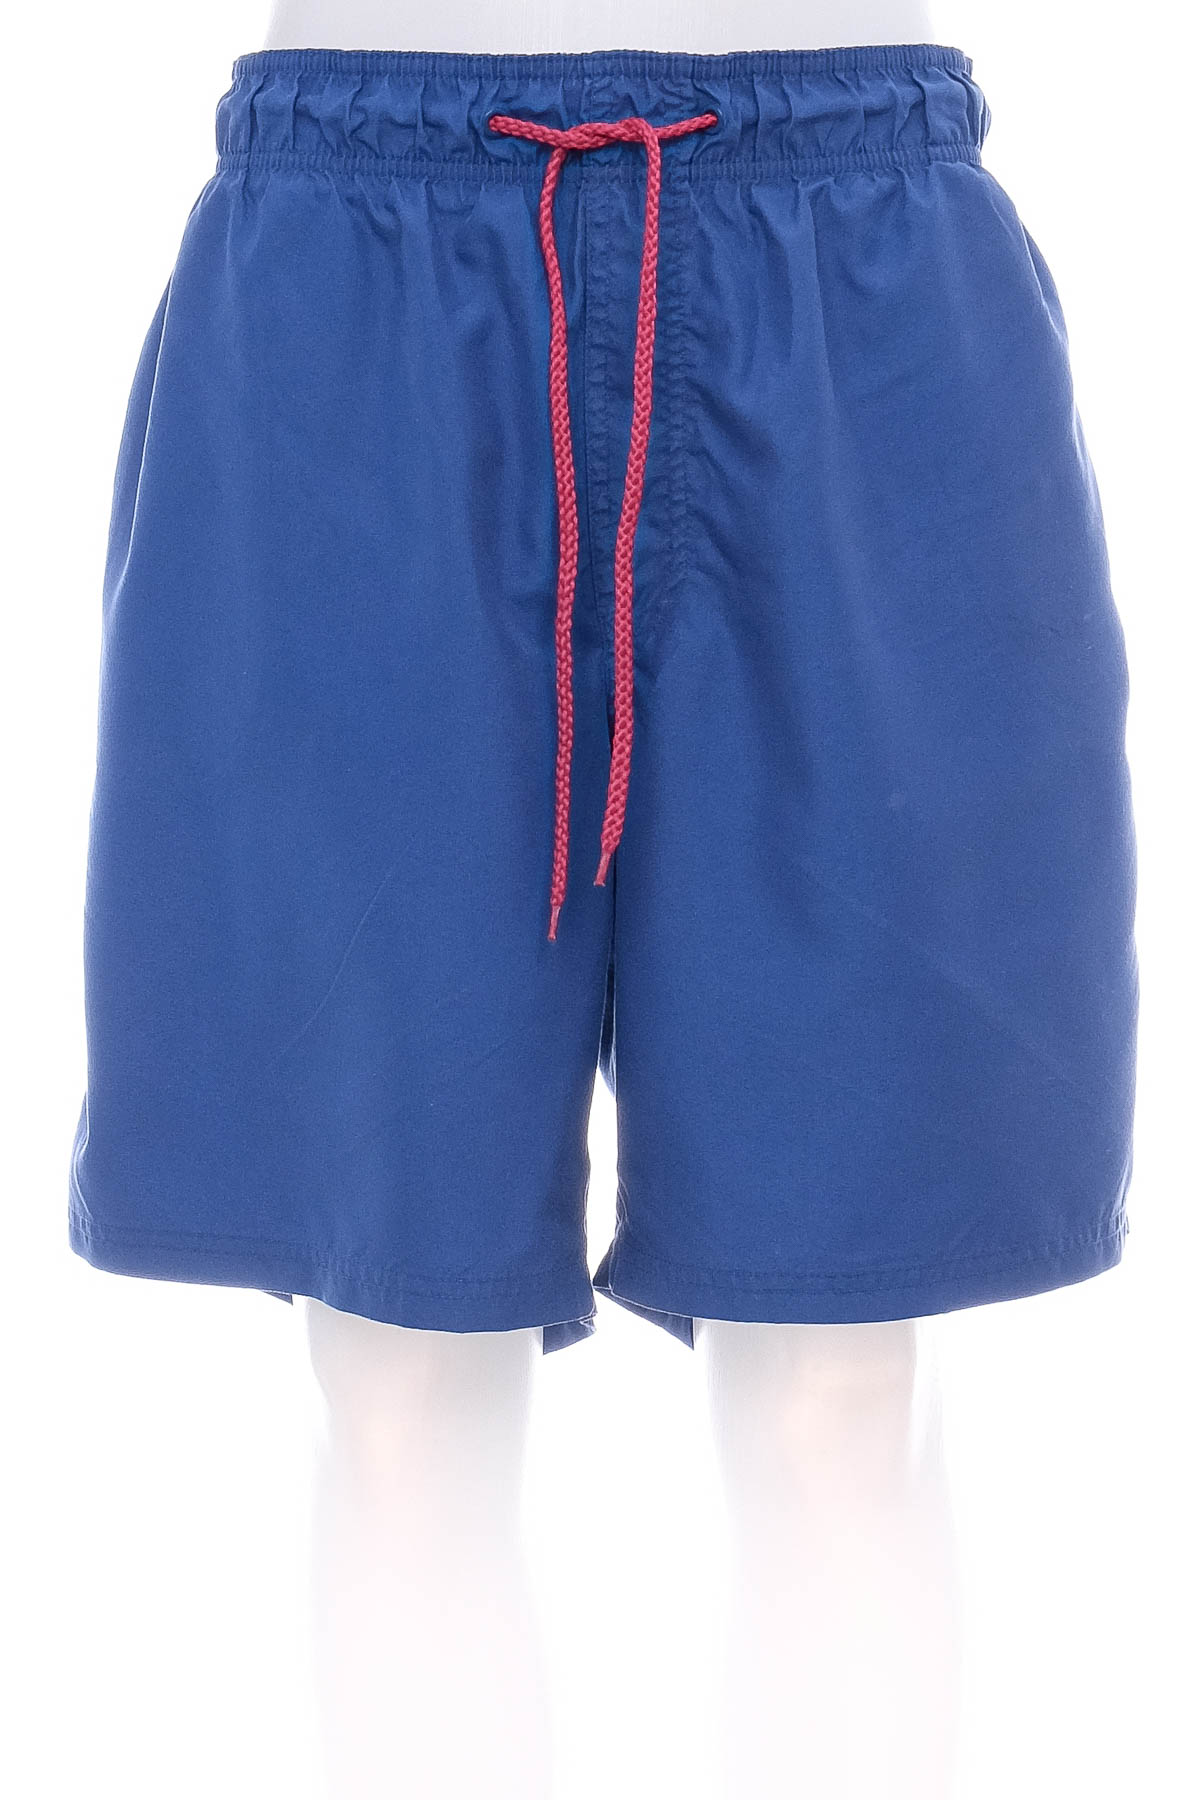 Men's shorts - Crivit - 0